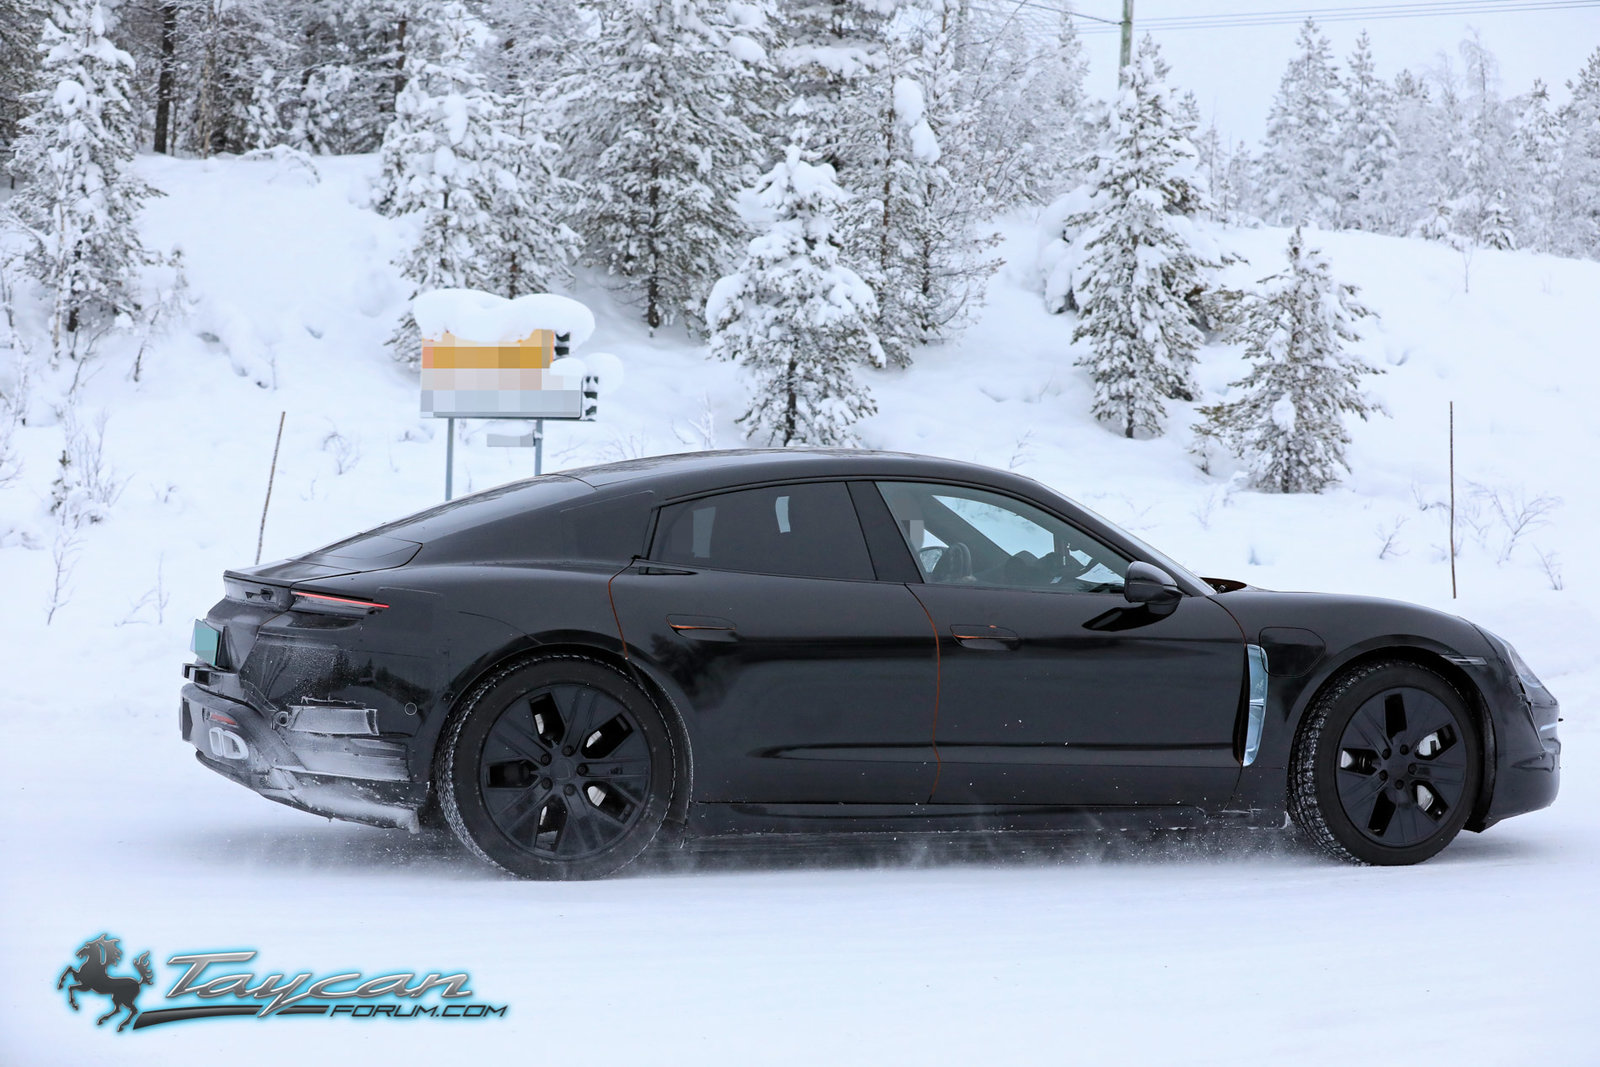 Porsche Taycan prototypes spotted winter testing - Electrek